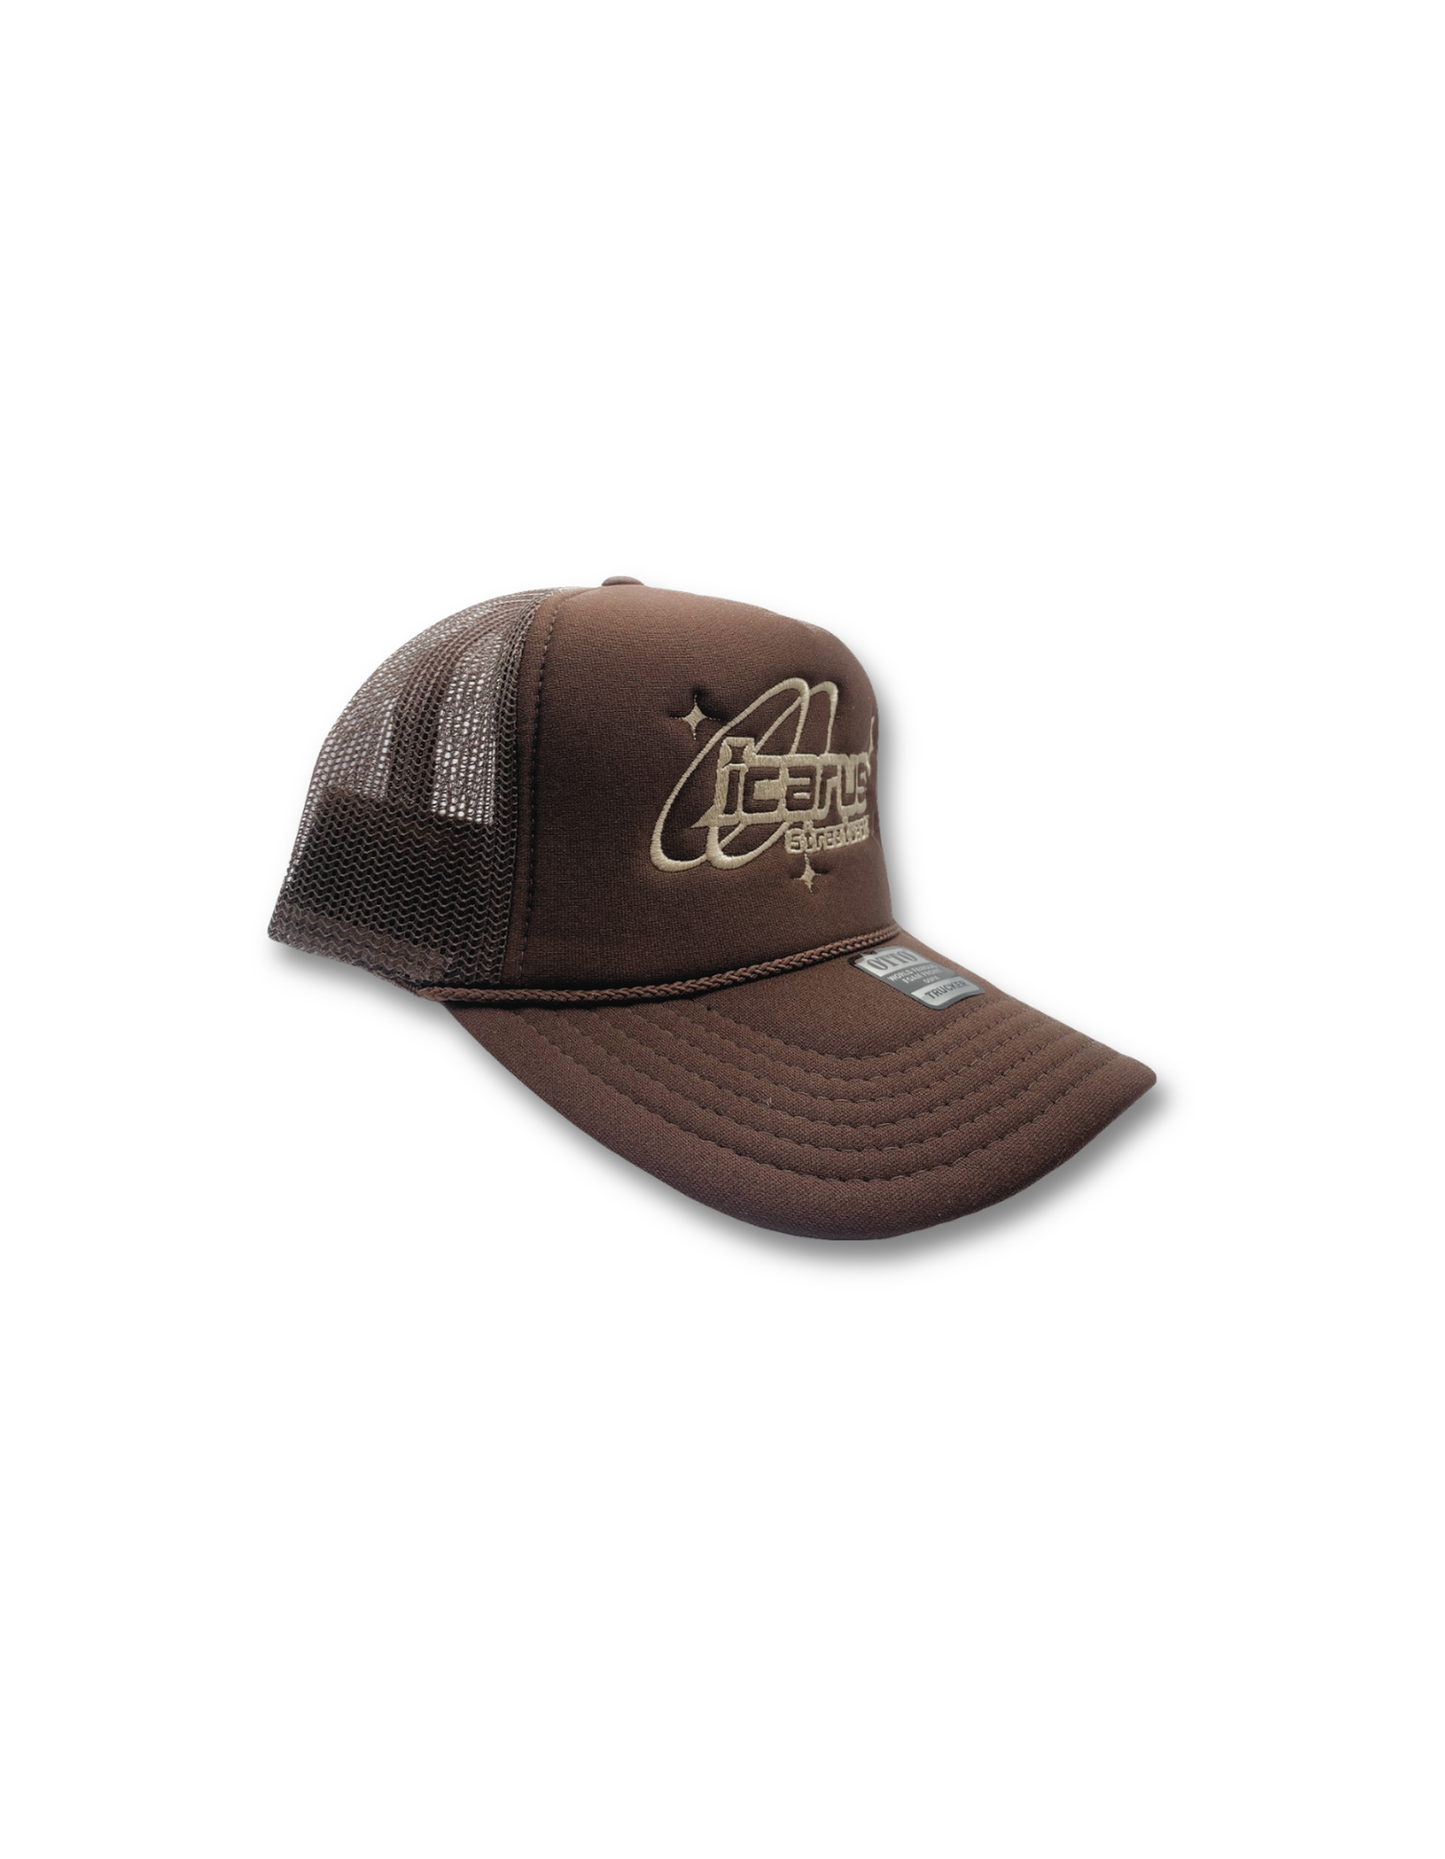 Icarus Streetwear Brown Trucker Hat